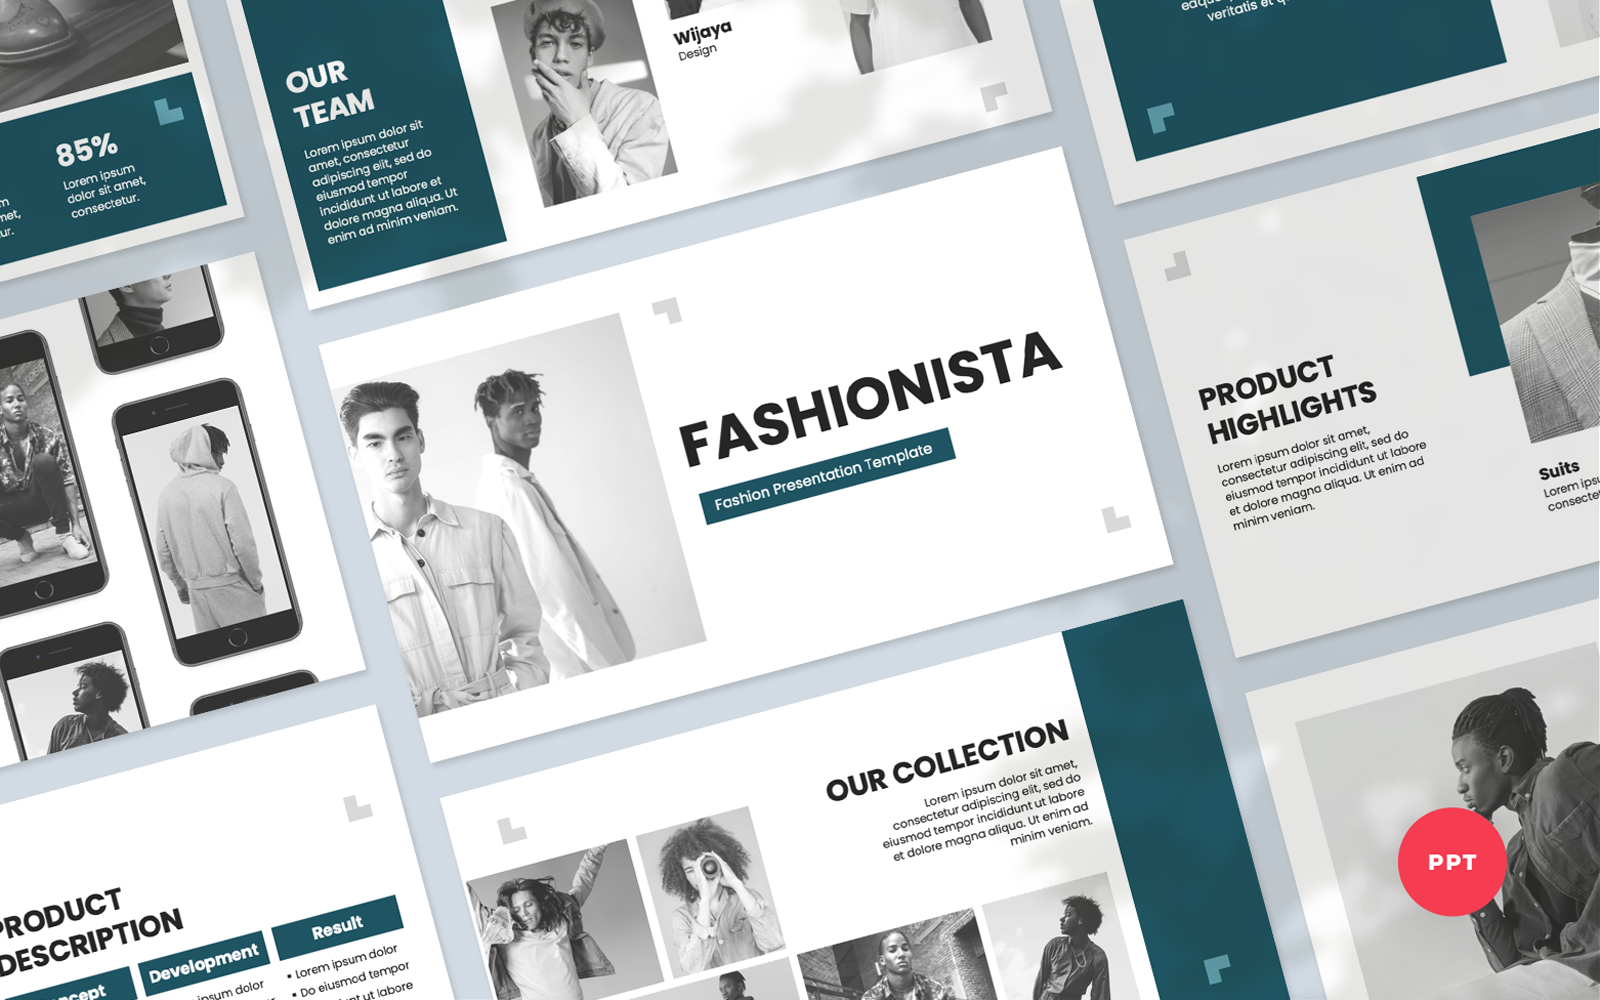 Fashionista - Fashion Brand PowerPoint Presentation